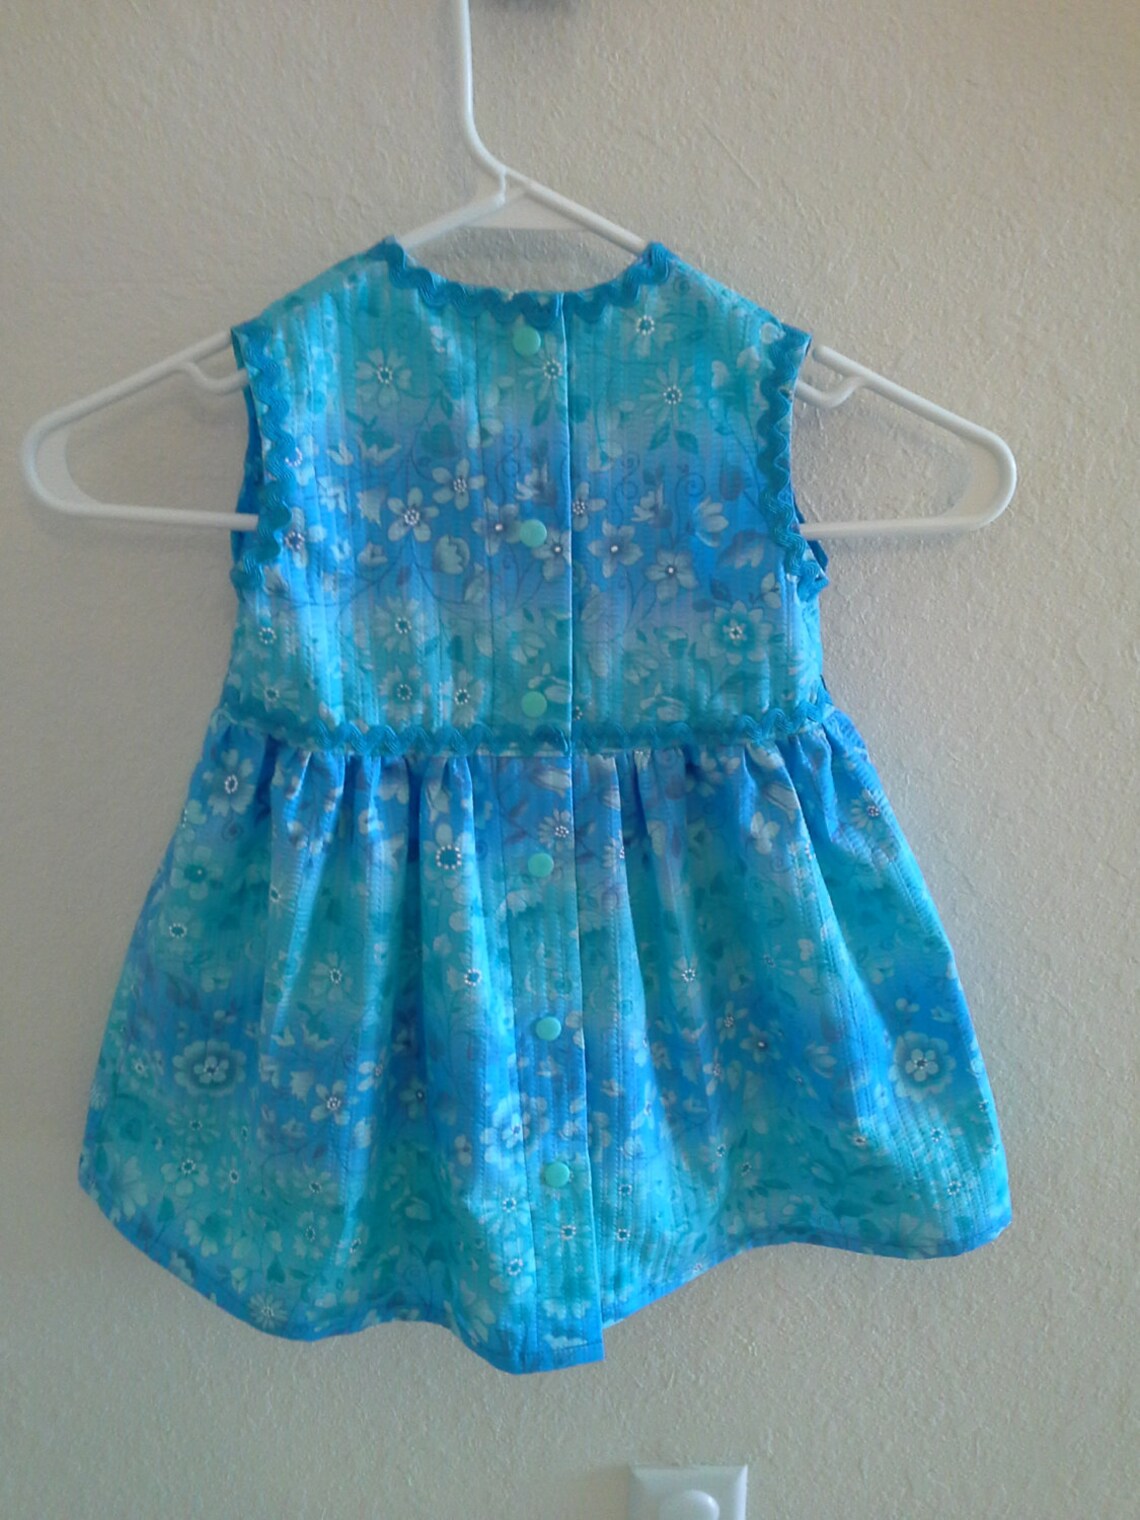 Aqua Seersucker Toddler Dress with matching Bloomers | Etsy